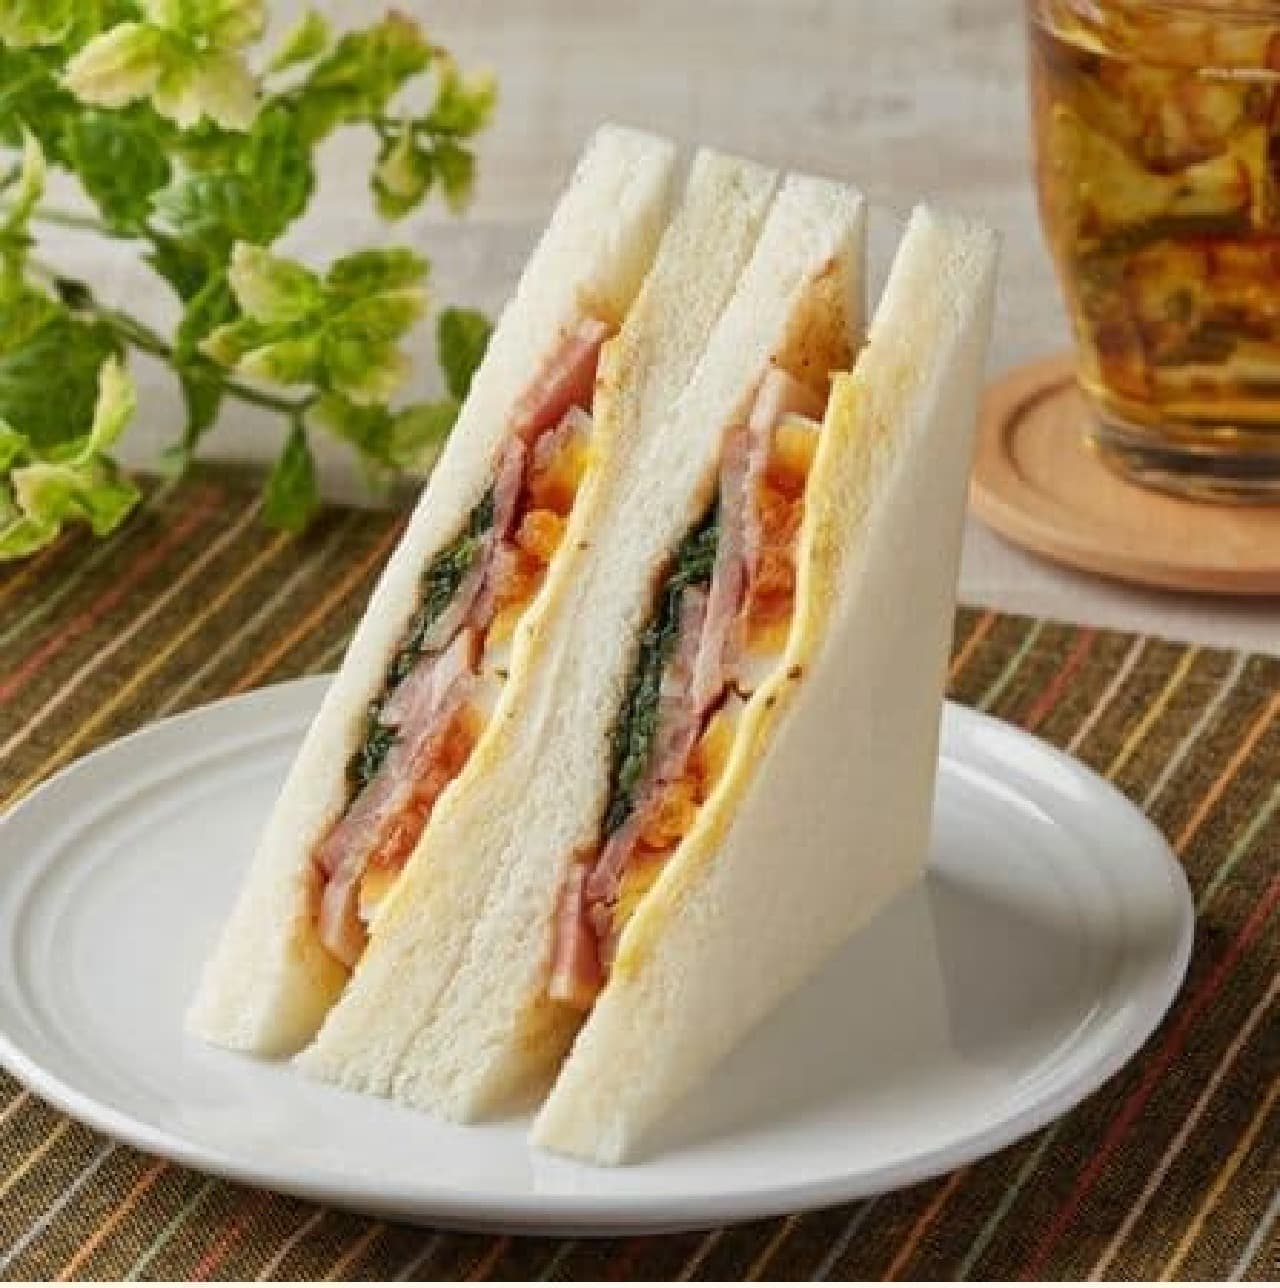 FamilyMart "Bacon and soft-boiled egg sandwich"